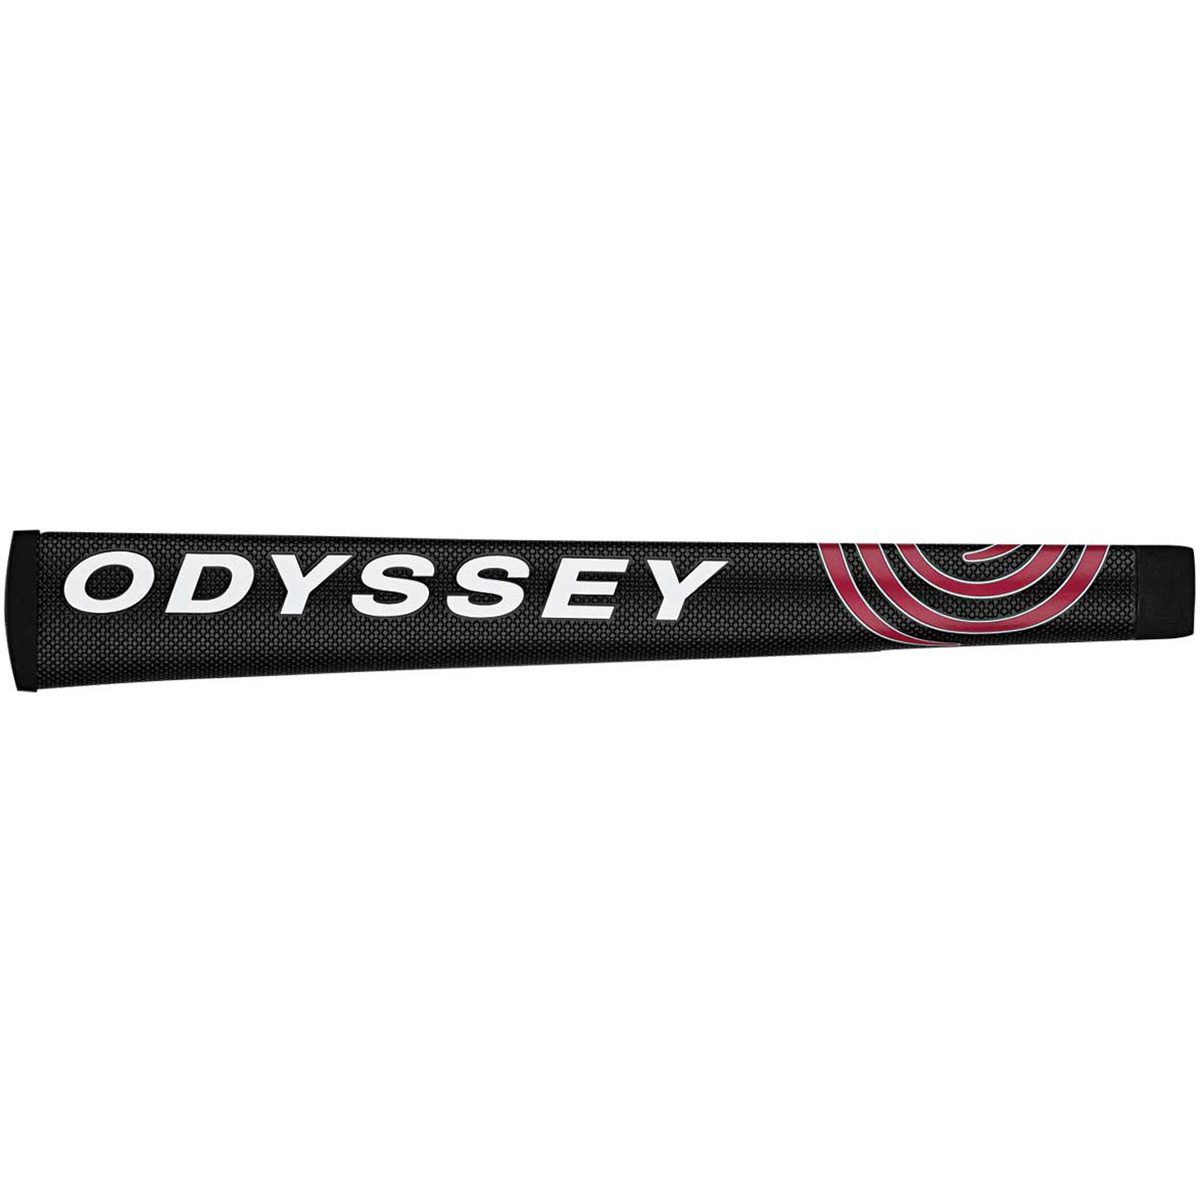 Odyssey | Putter grip | Jumbo | Black